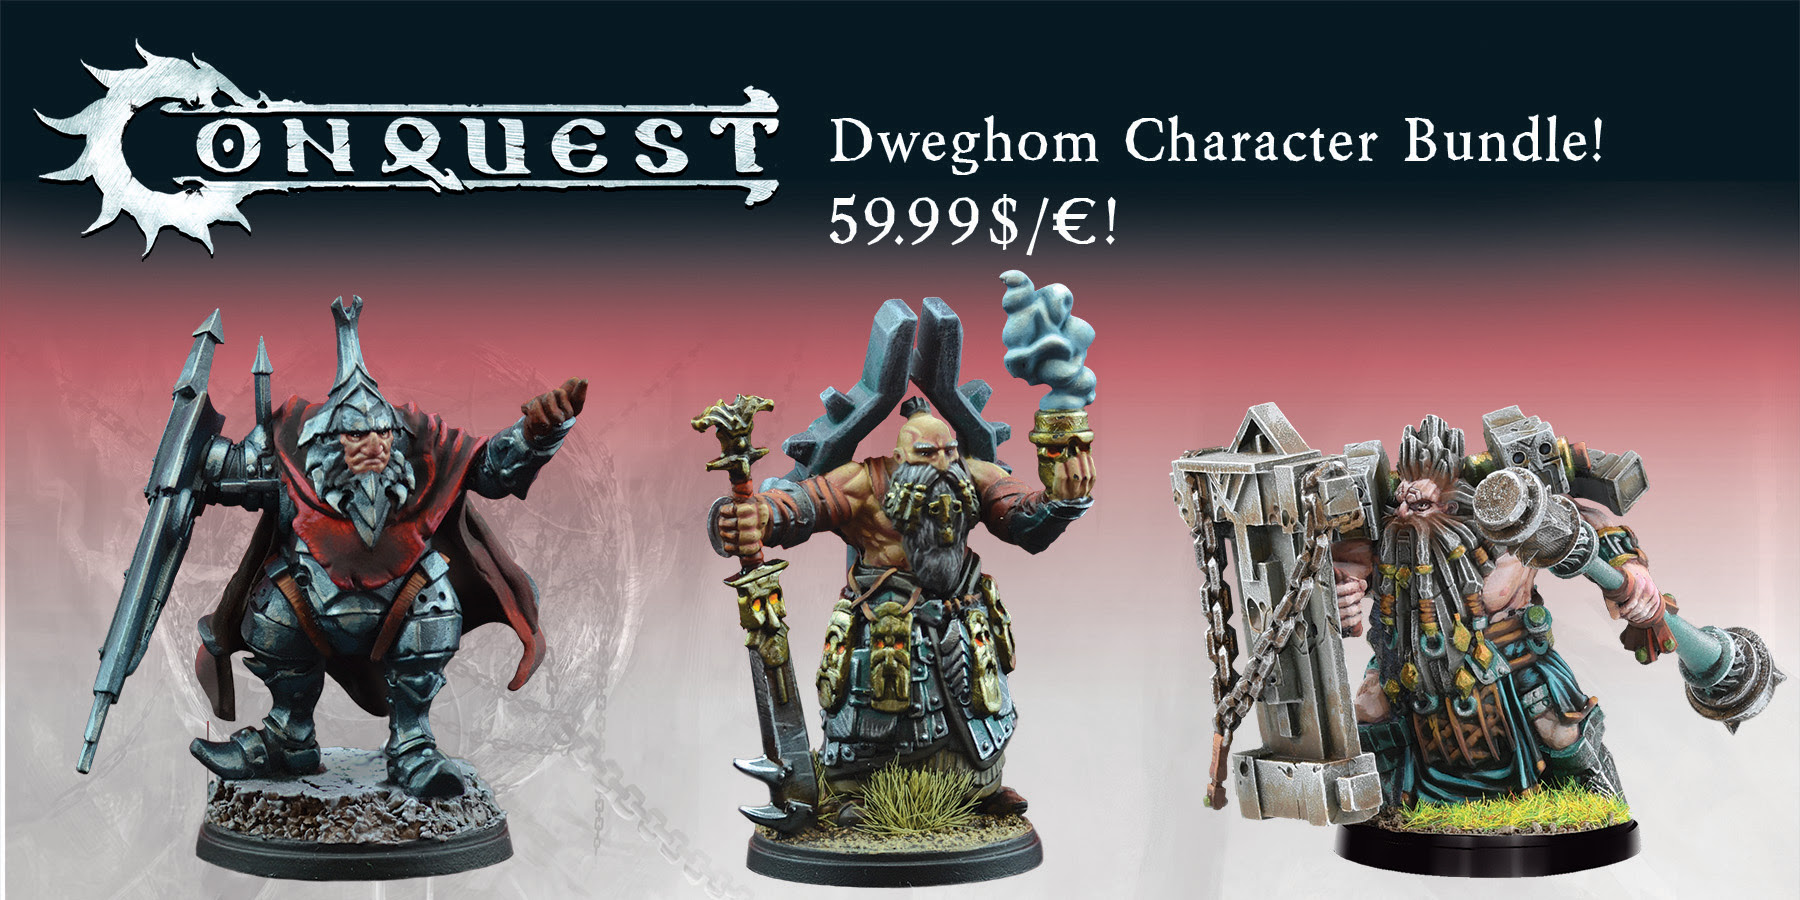 Dweghom Character Bundle - Conquest